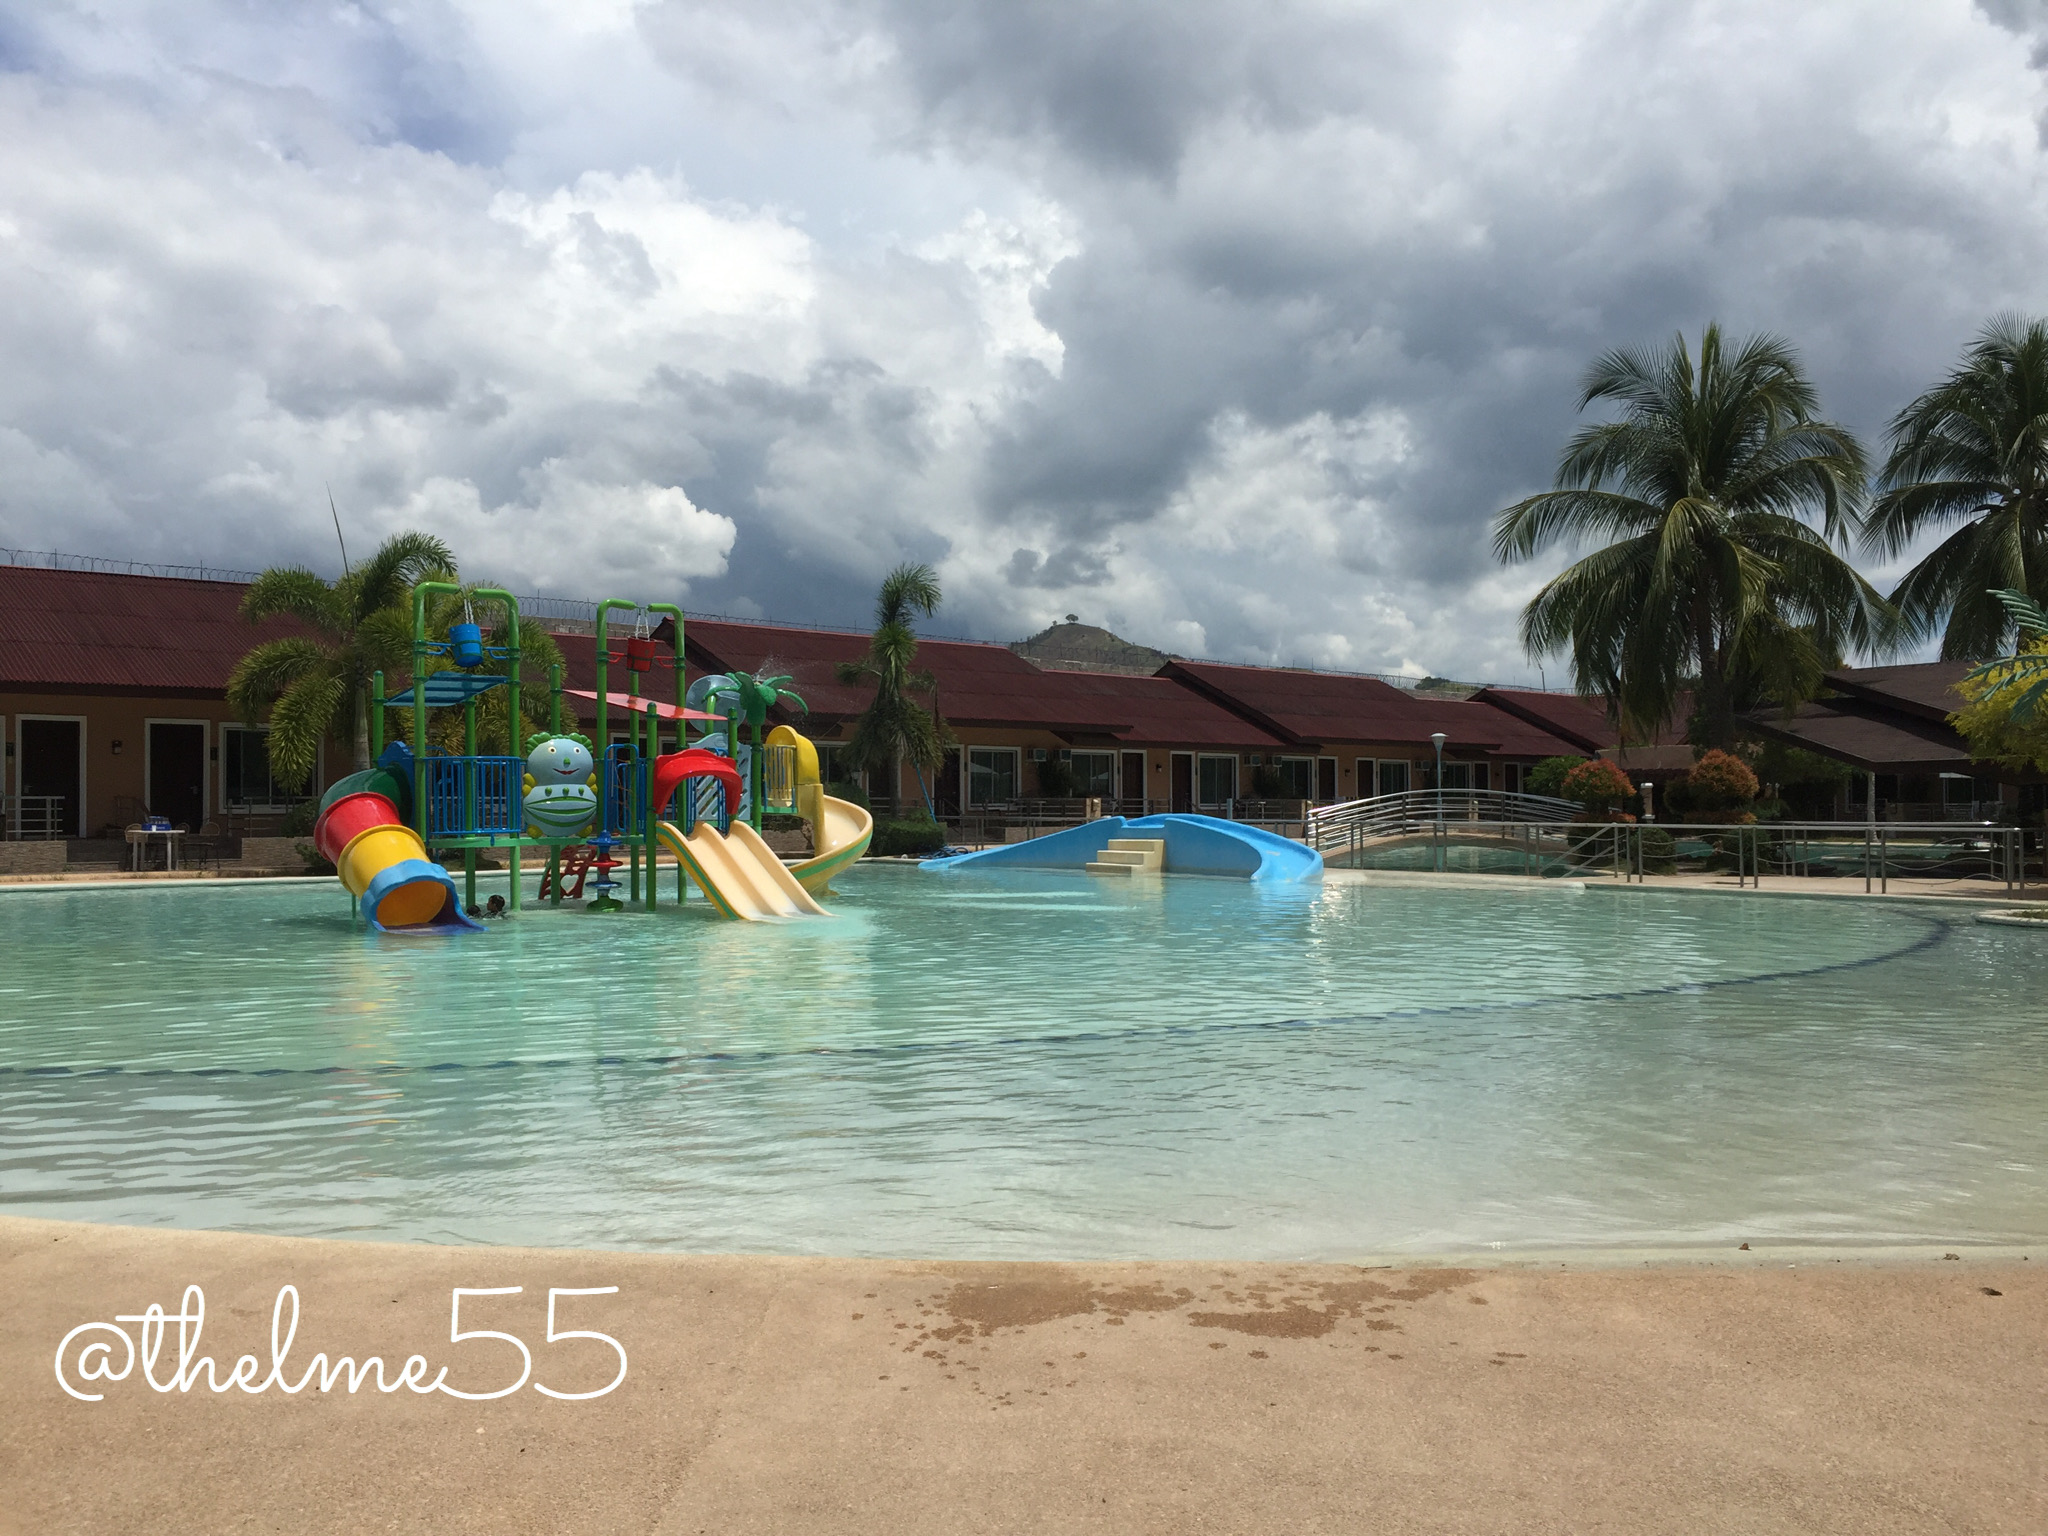 Amontay beach resort swimming pool.